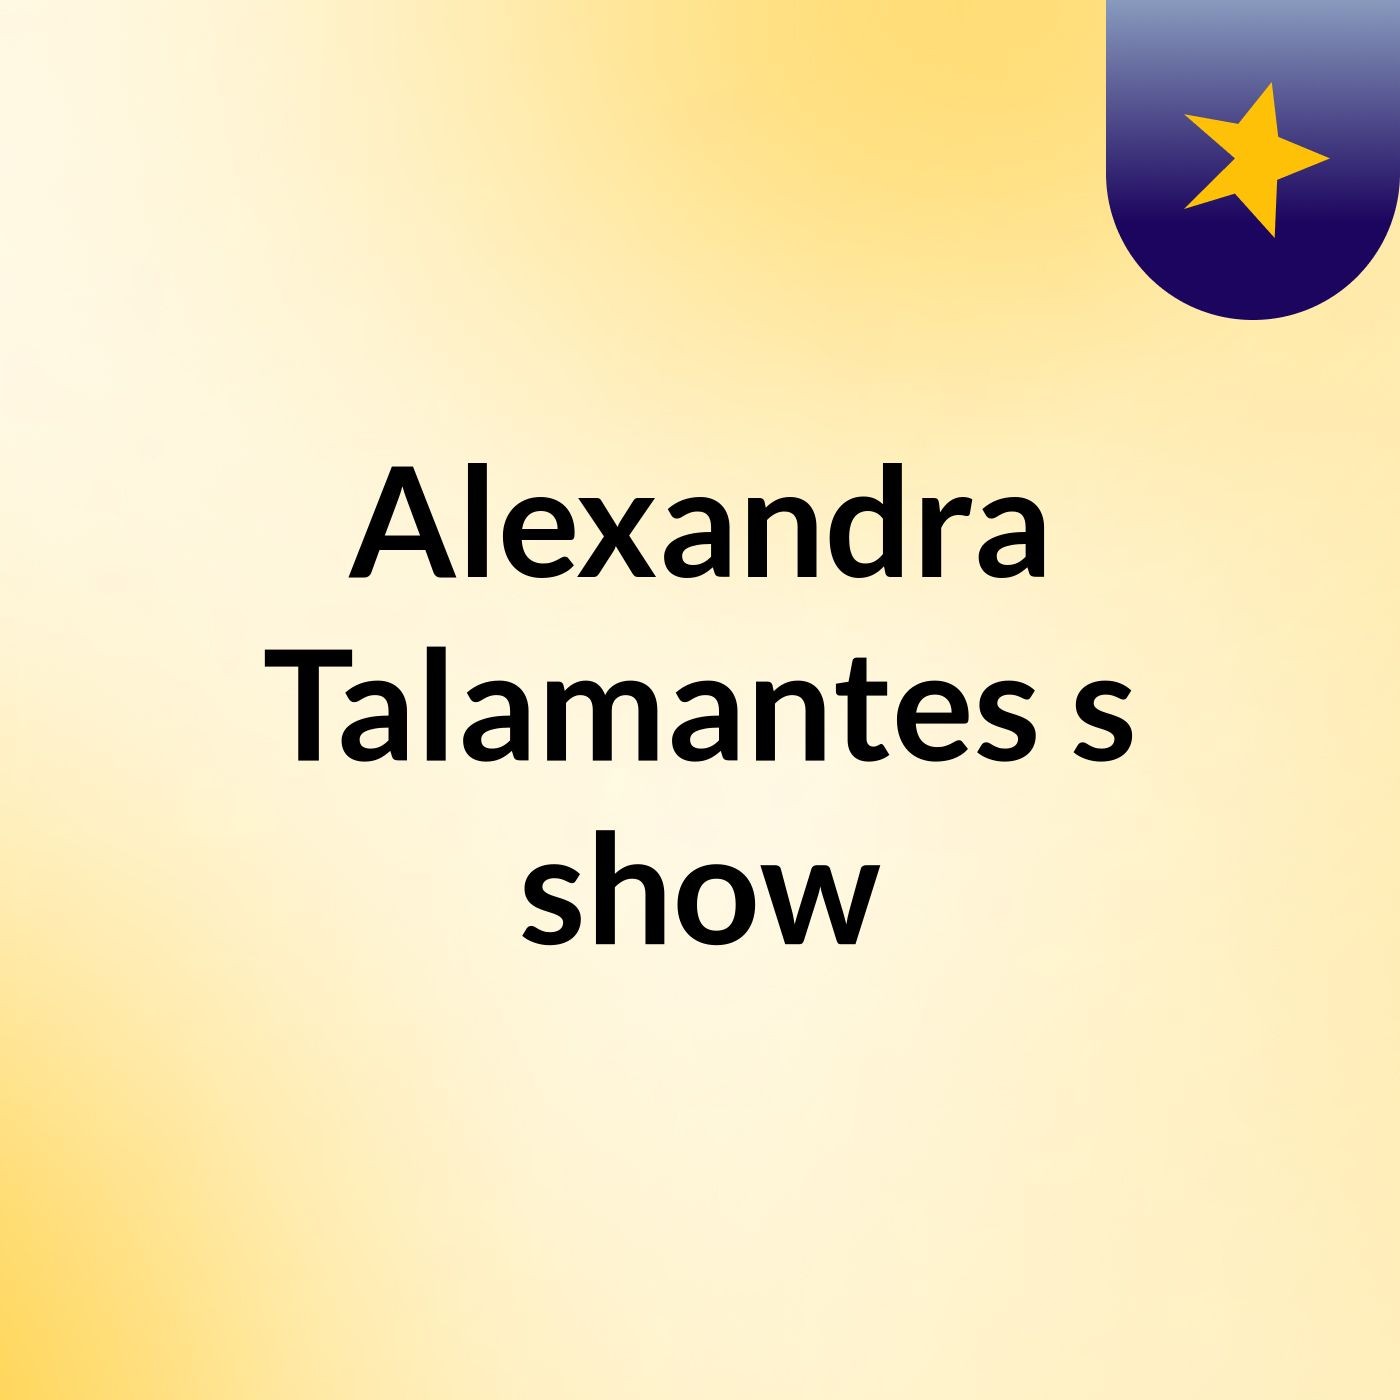 Alexandra Talamantes's show